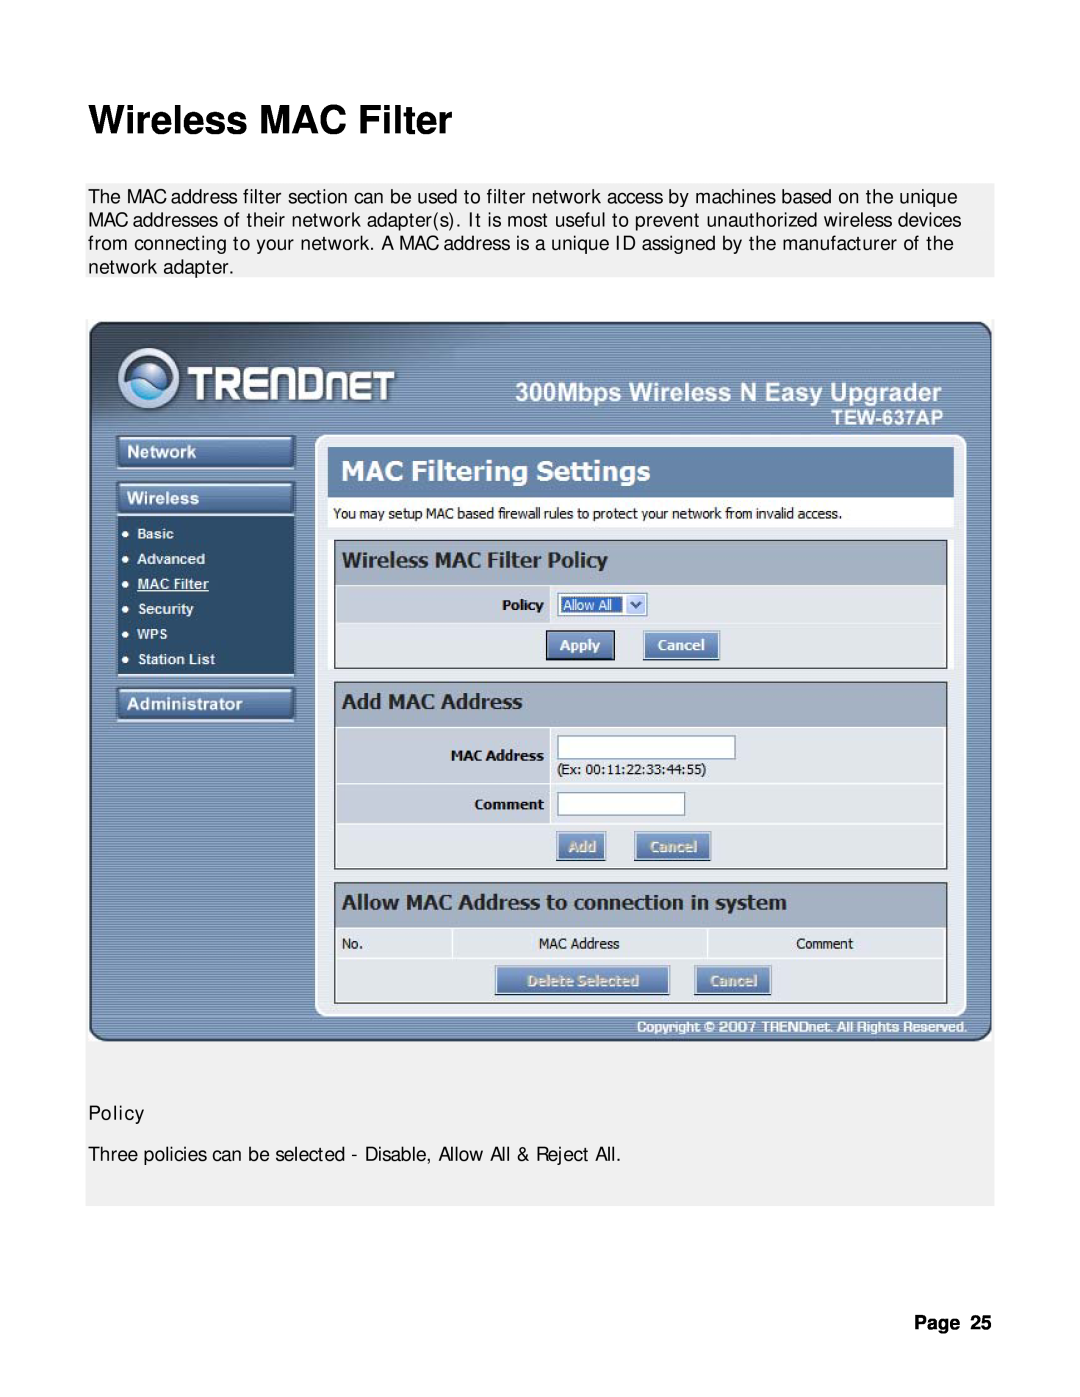 TRENDnet TEW-637AP manual Wireless MAC Filter, Policy 